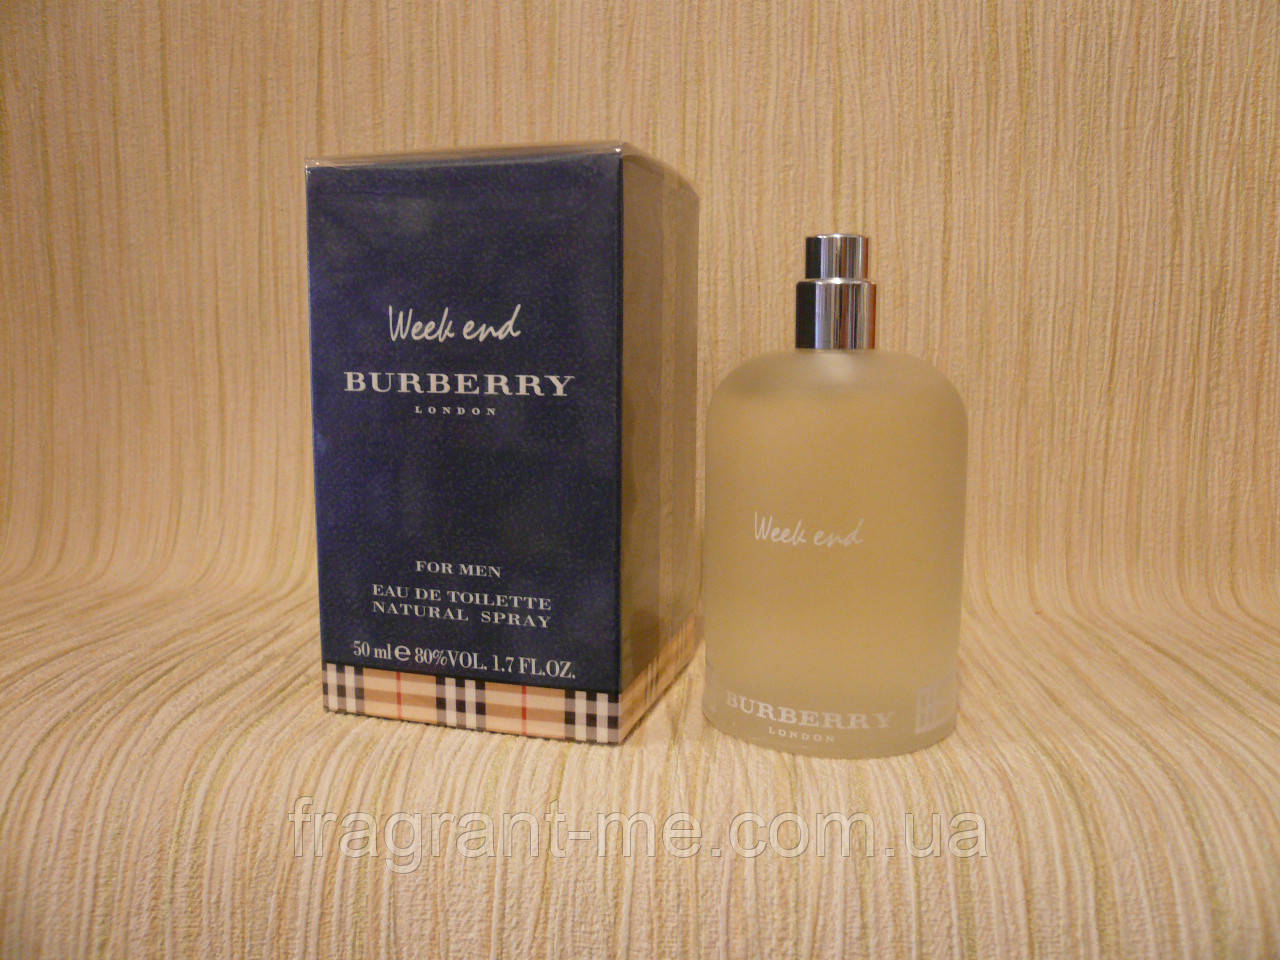 Burberry — Weekend For Men (1997) — Туалетна вода 100 мл (тестер) — Вінтаж, випуск і формула аромату 1997 року